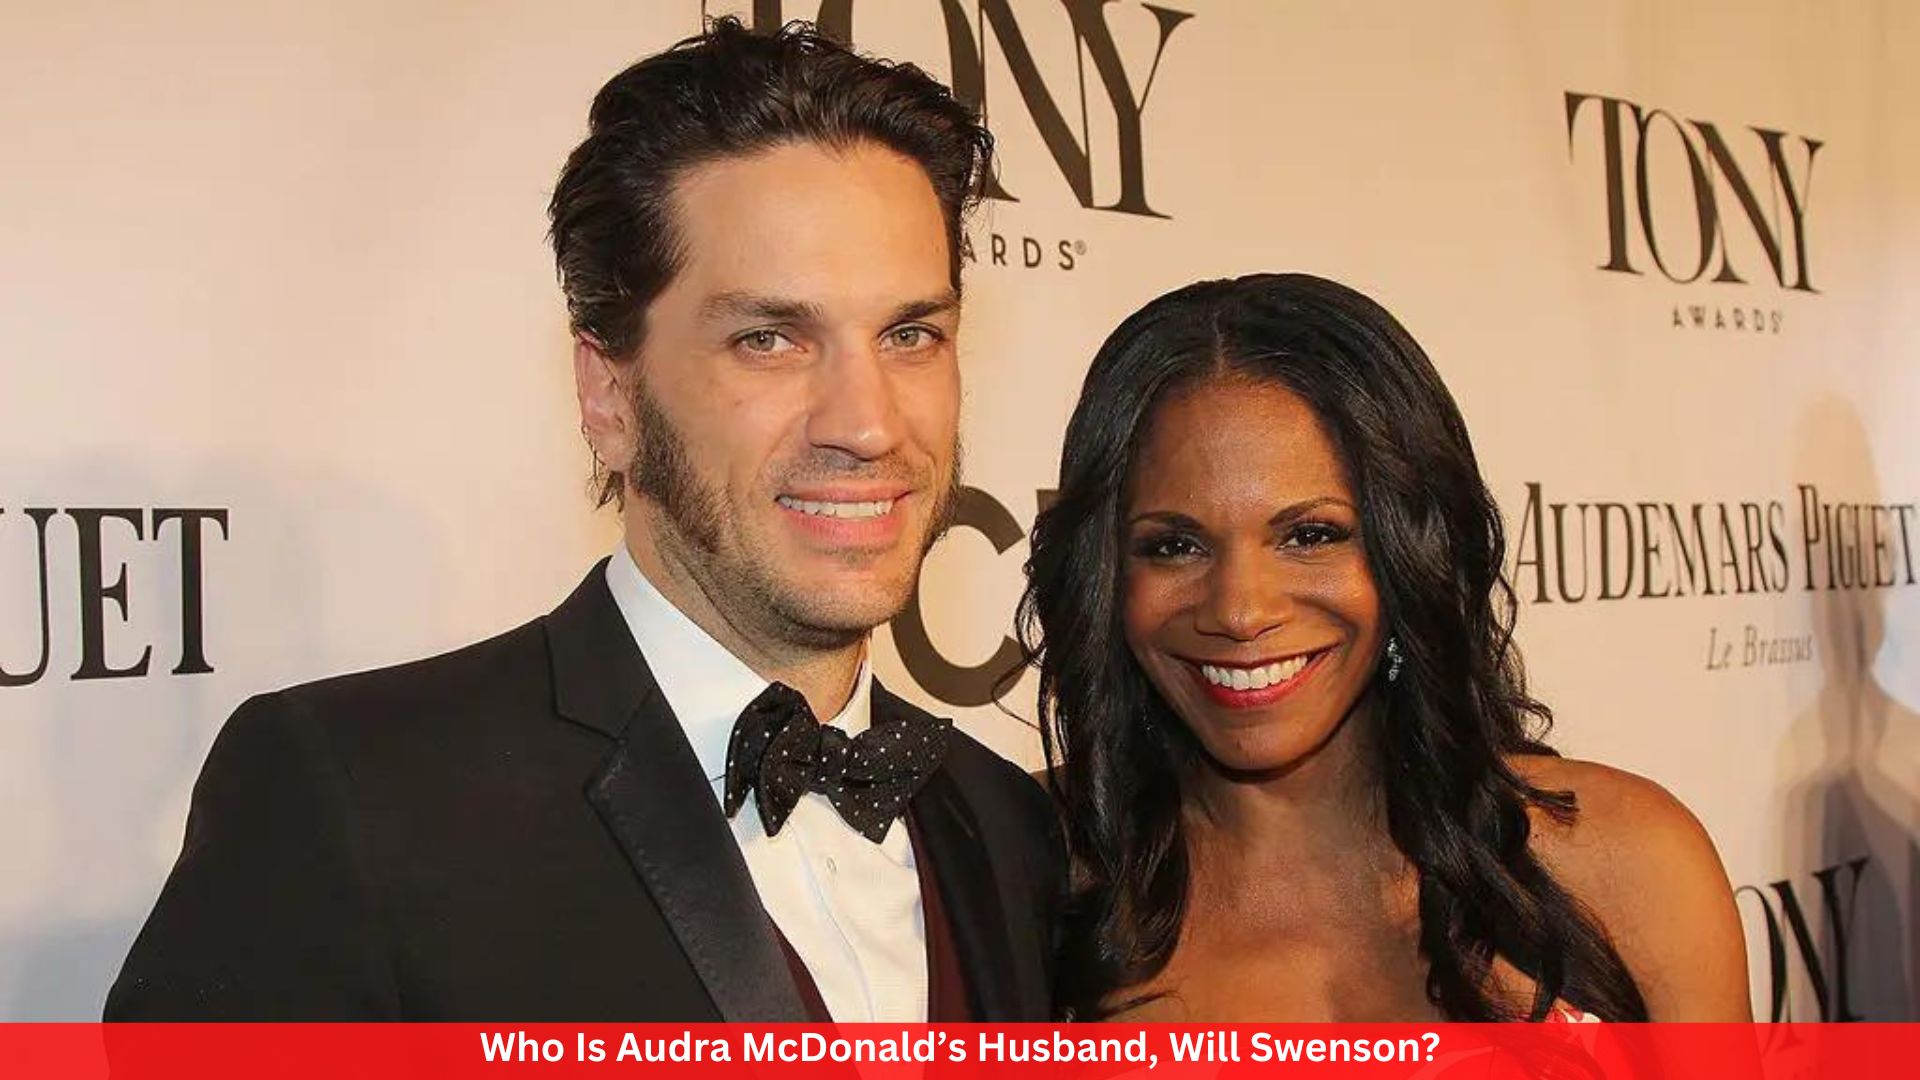 Who Is Audra McDonald’s Husband, Will Swenson?